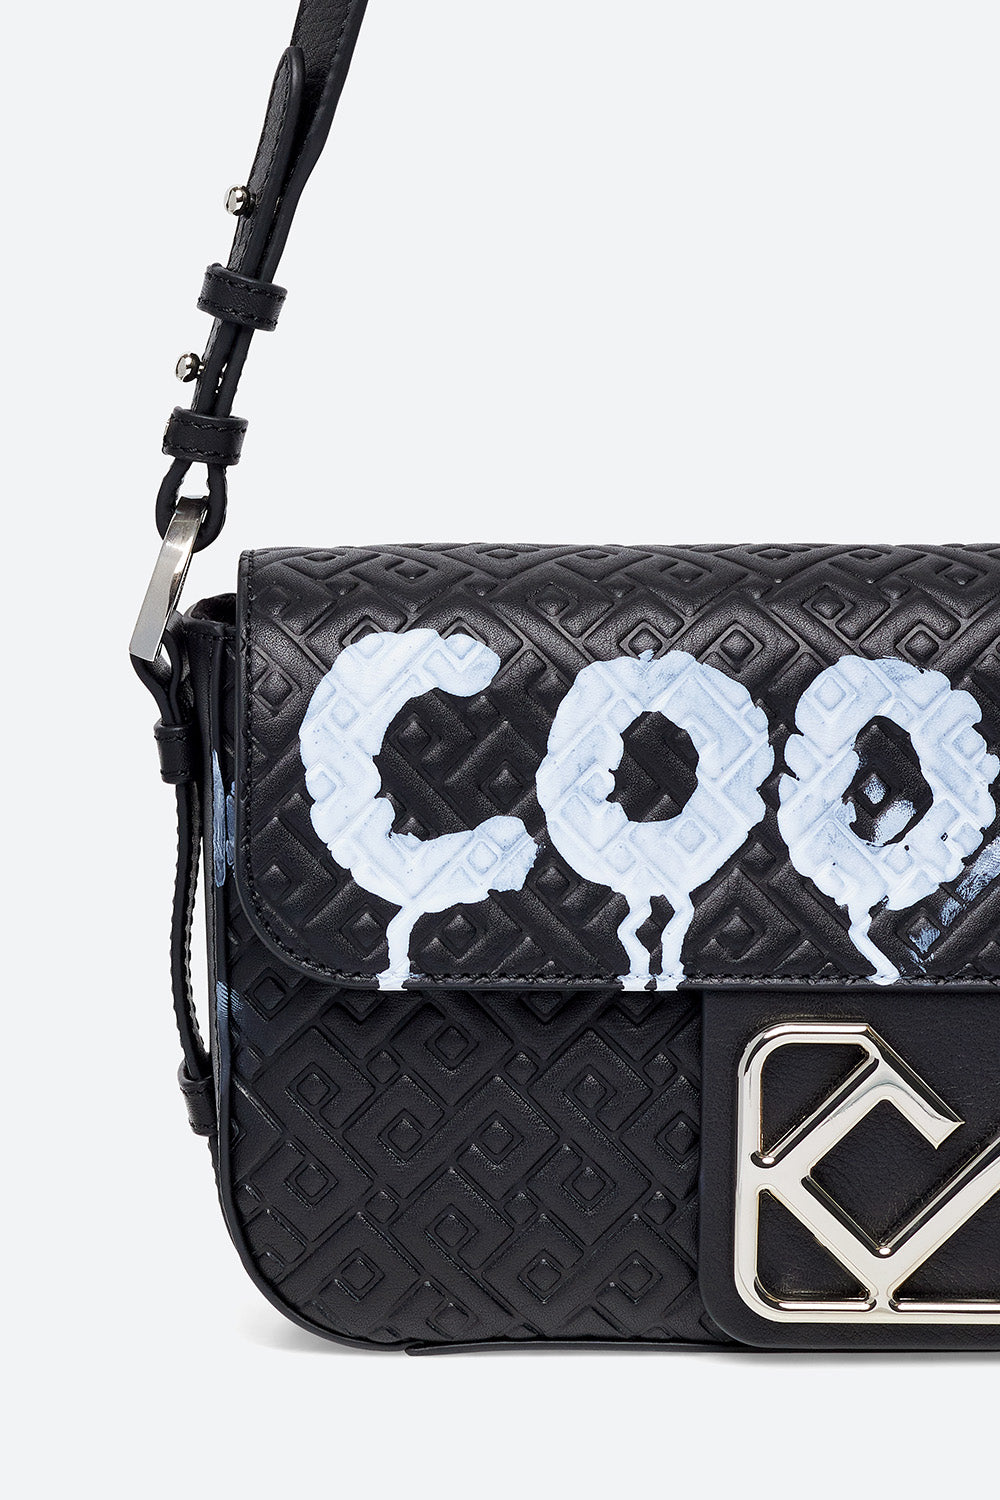 Coolman Coffeedan Series: Malvina "Coolman" Handbag in Black